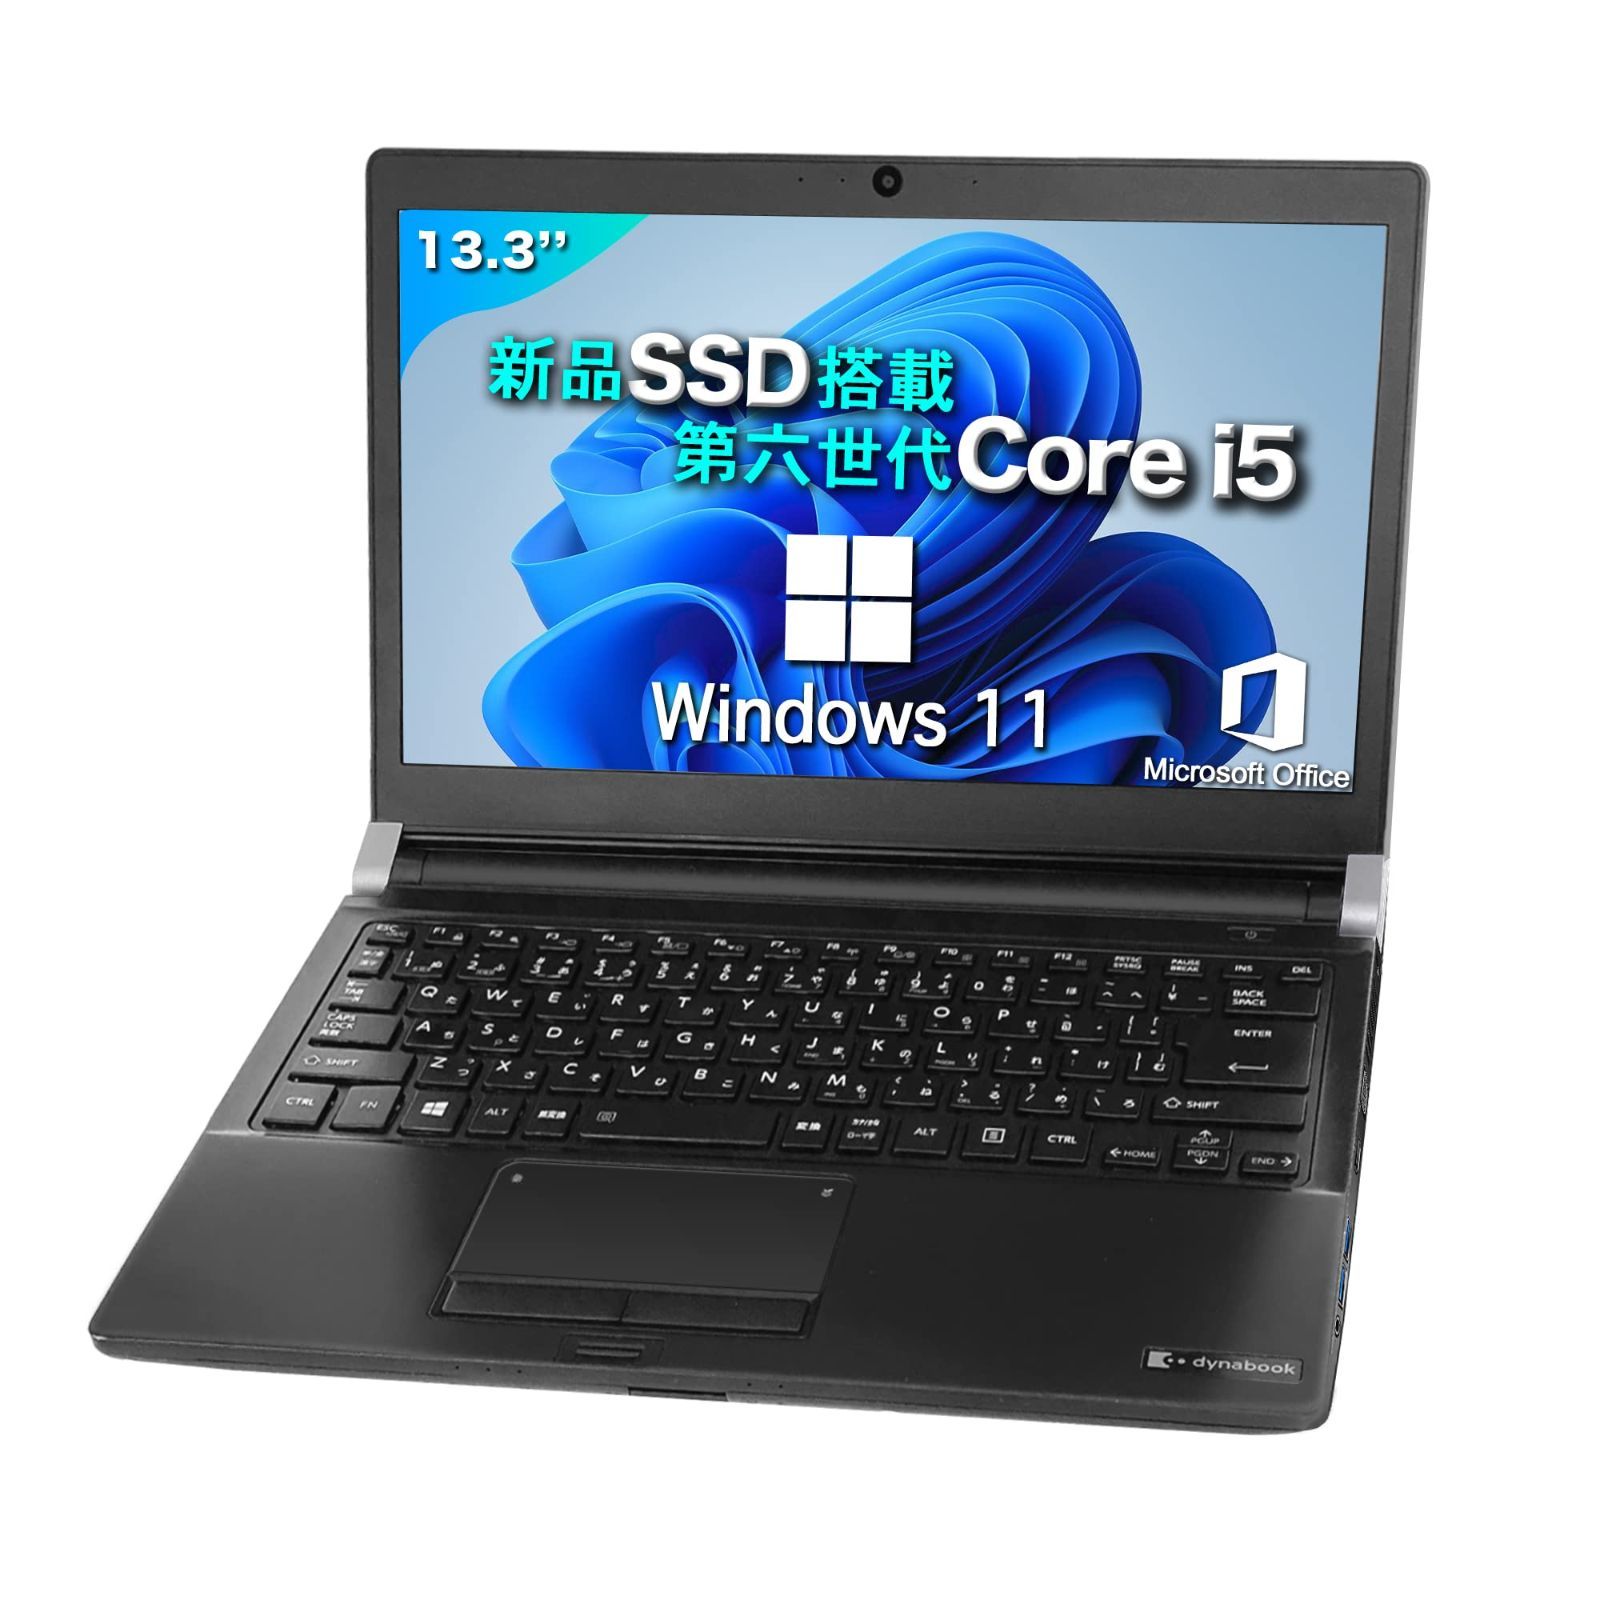 SSD:512GB ノートPC 13.3インチ液晶無線LAN搭載miniHDMI初期設定不要初心者向け在宅勤務laptop ノート日本語キーボードメモリー8GB  パソコン i5 Core 高性能第6世代 シリーズ R736 Windows11 office搭載 - メルカリ